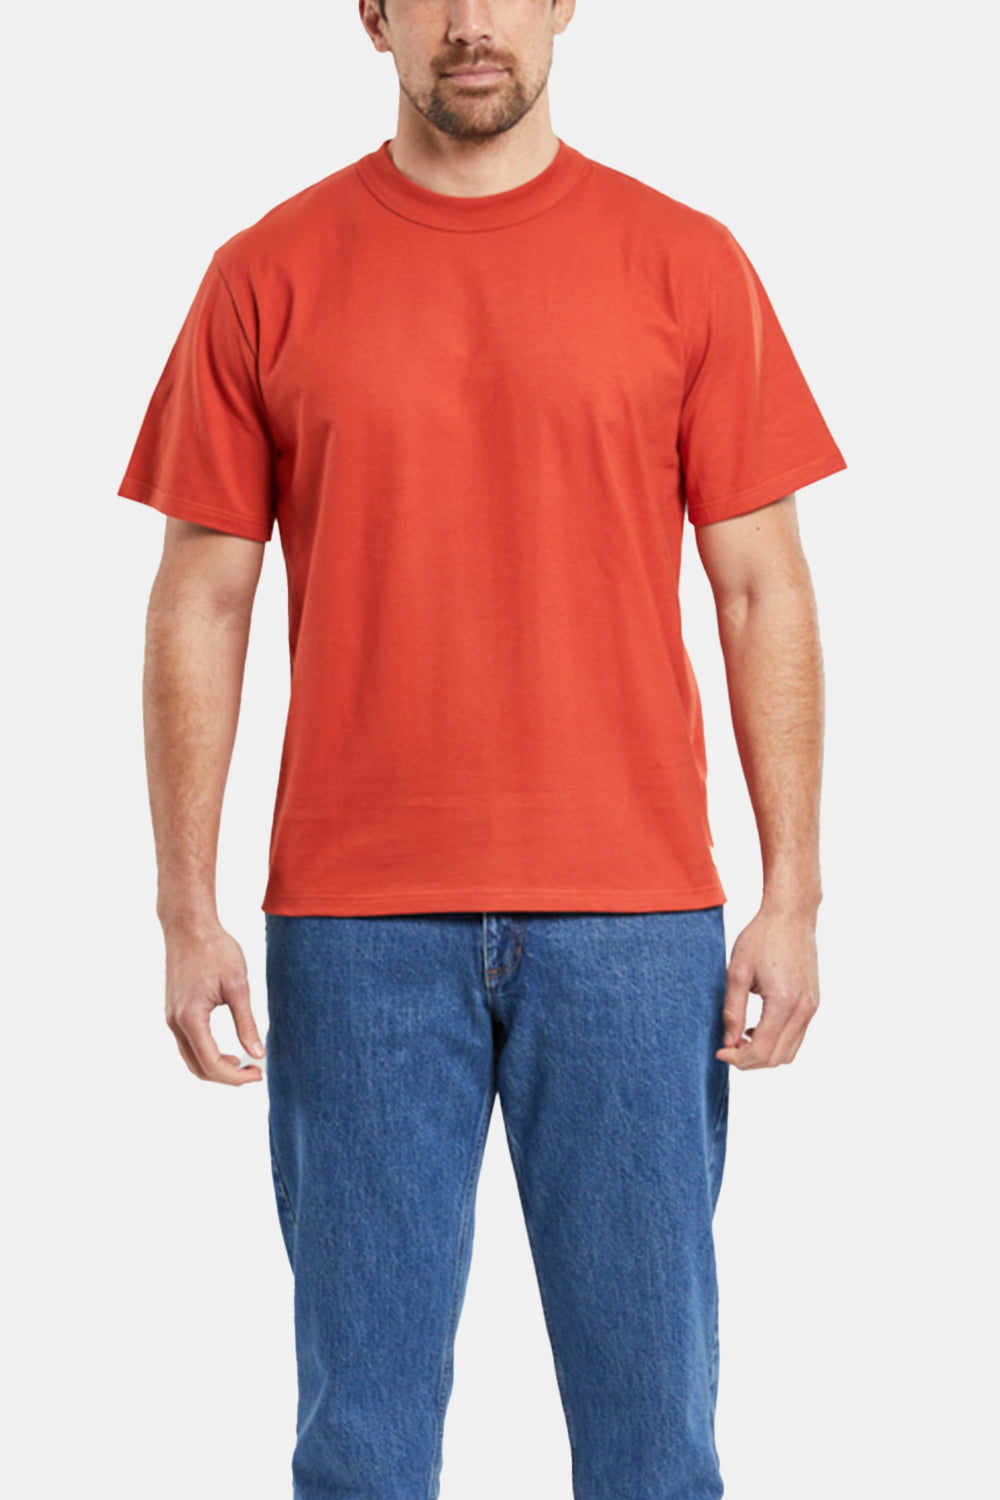 Armor Lux Heritage Organic Callac T-Shirt (Tajine Red)